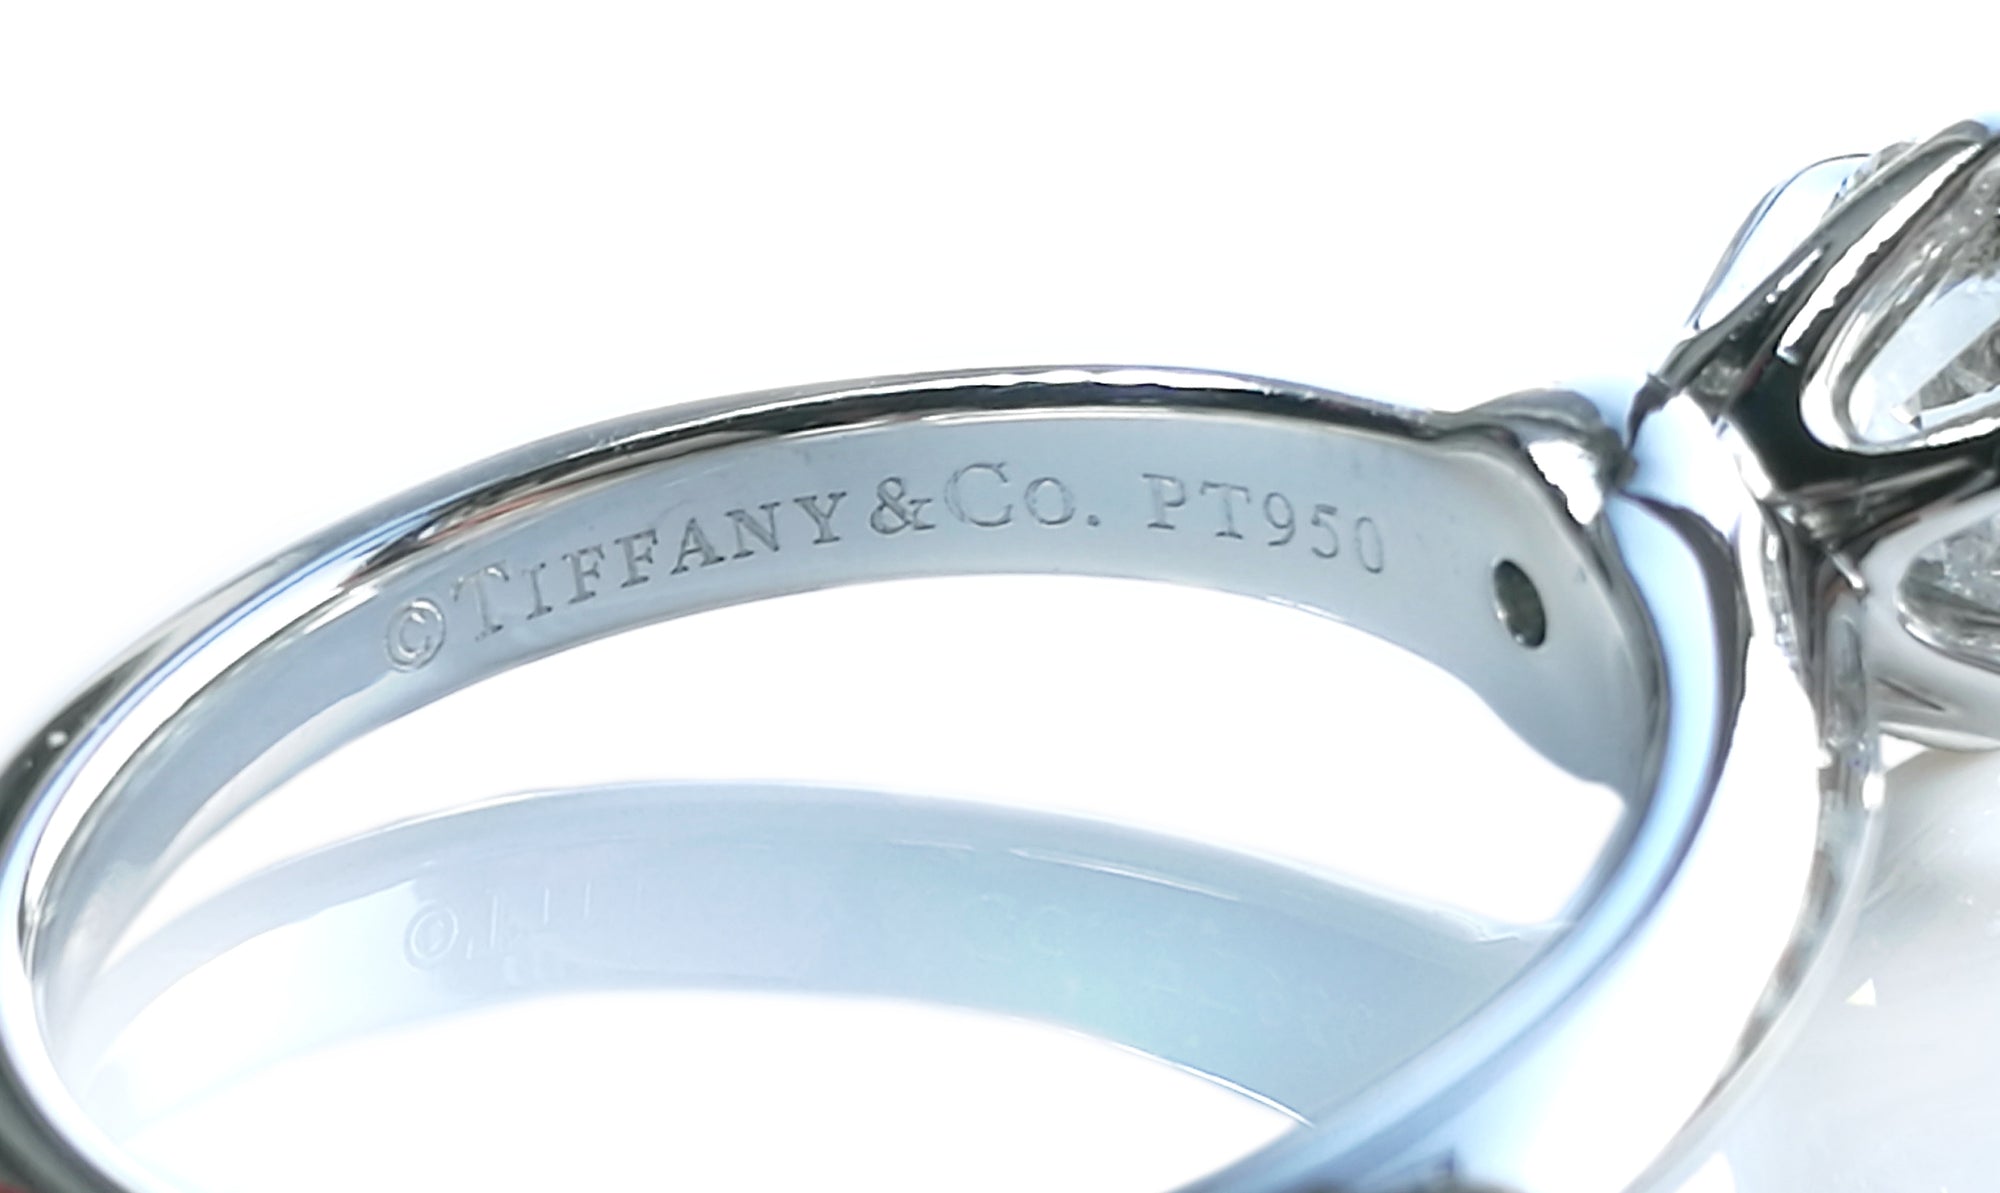 Tiffany & Co. 1.18ct E/VS2 Round Brilliant Diamond Engagement Ring